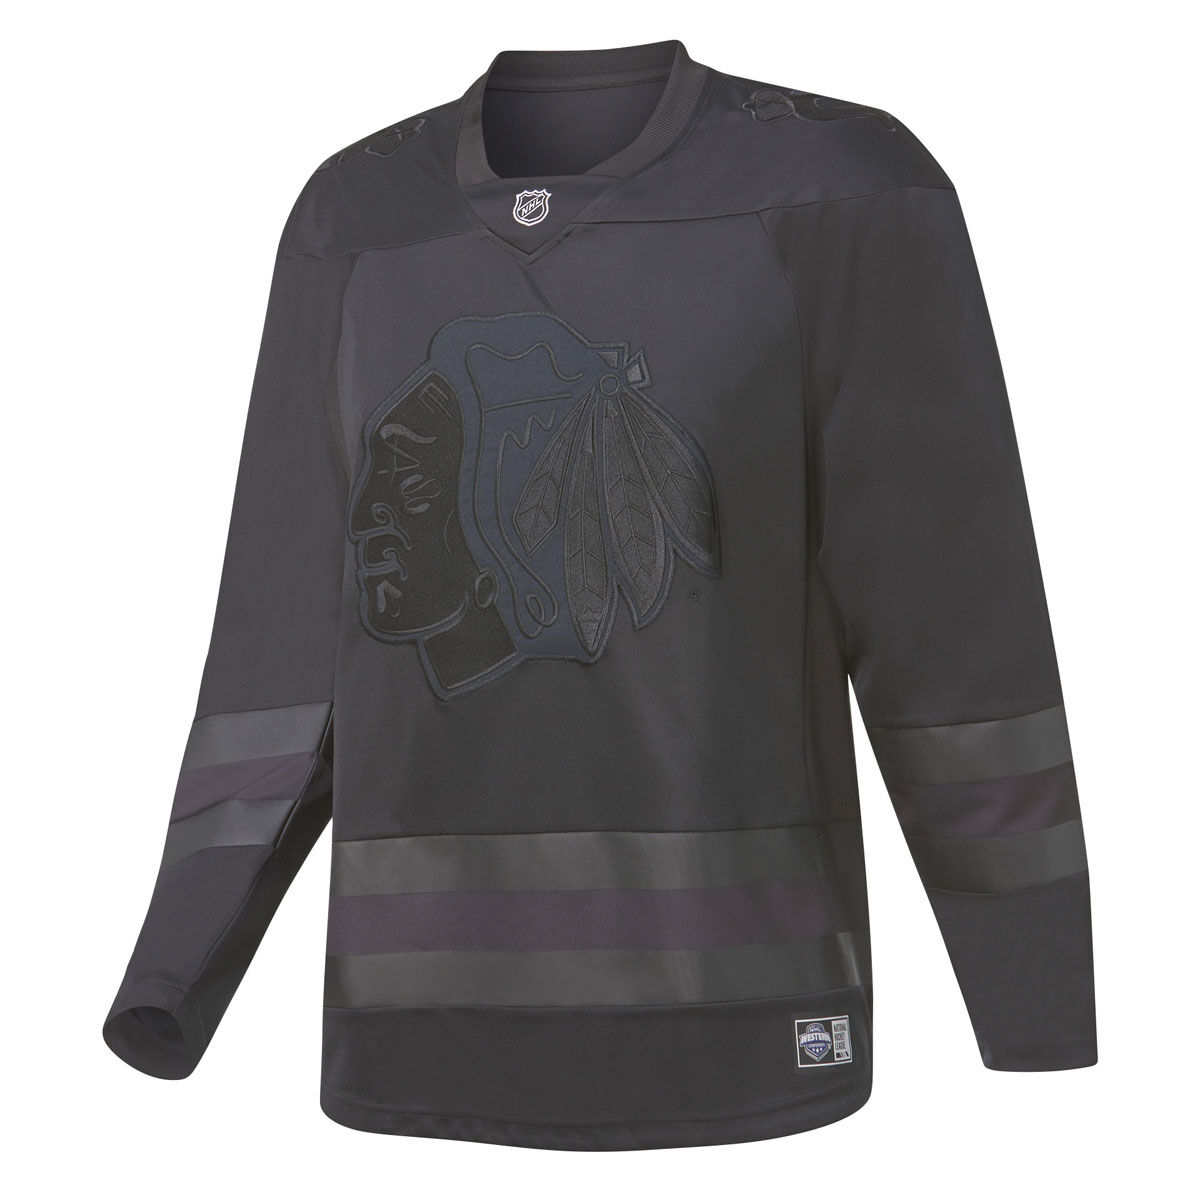 ShopCrystalRags Chicago Blackhawks, NHL One of A Kind Vintage Sweatshirt with Crystal Star Design